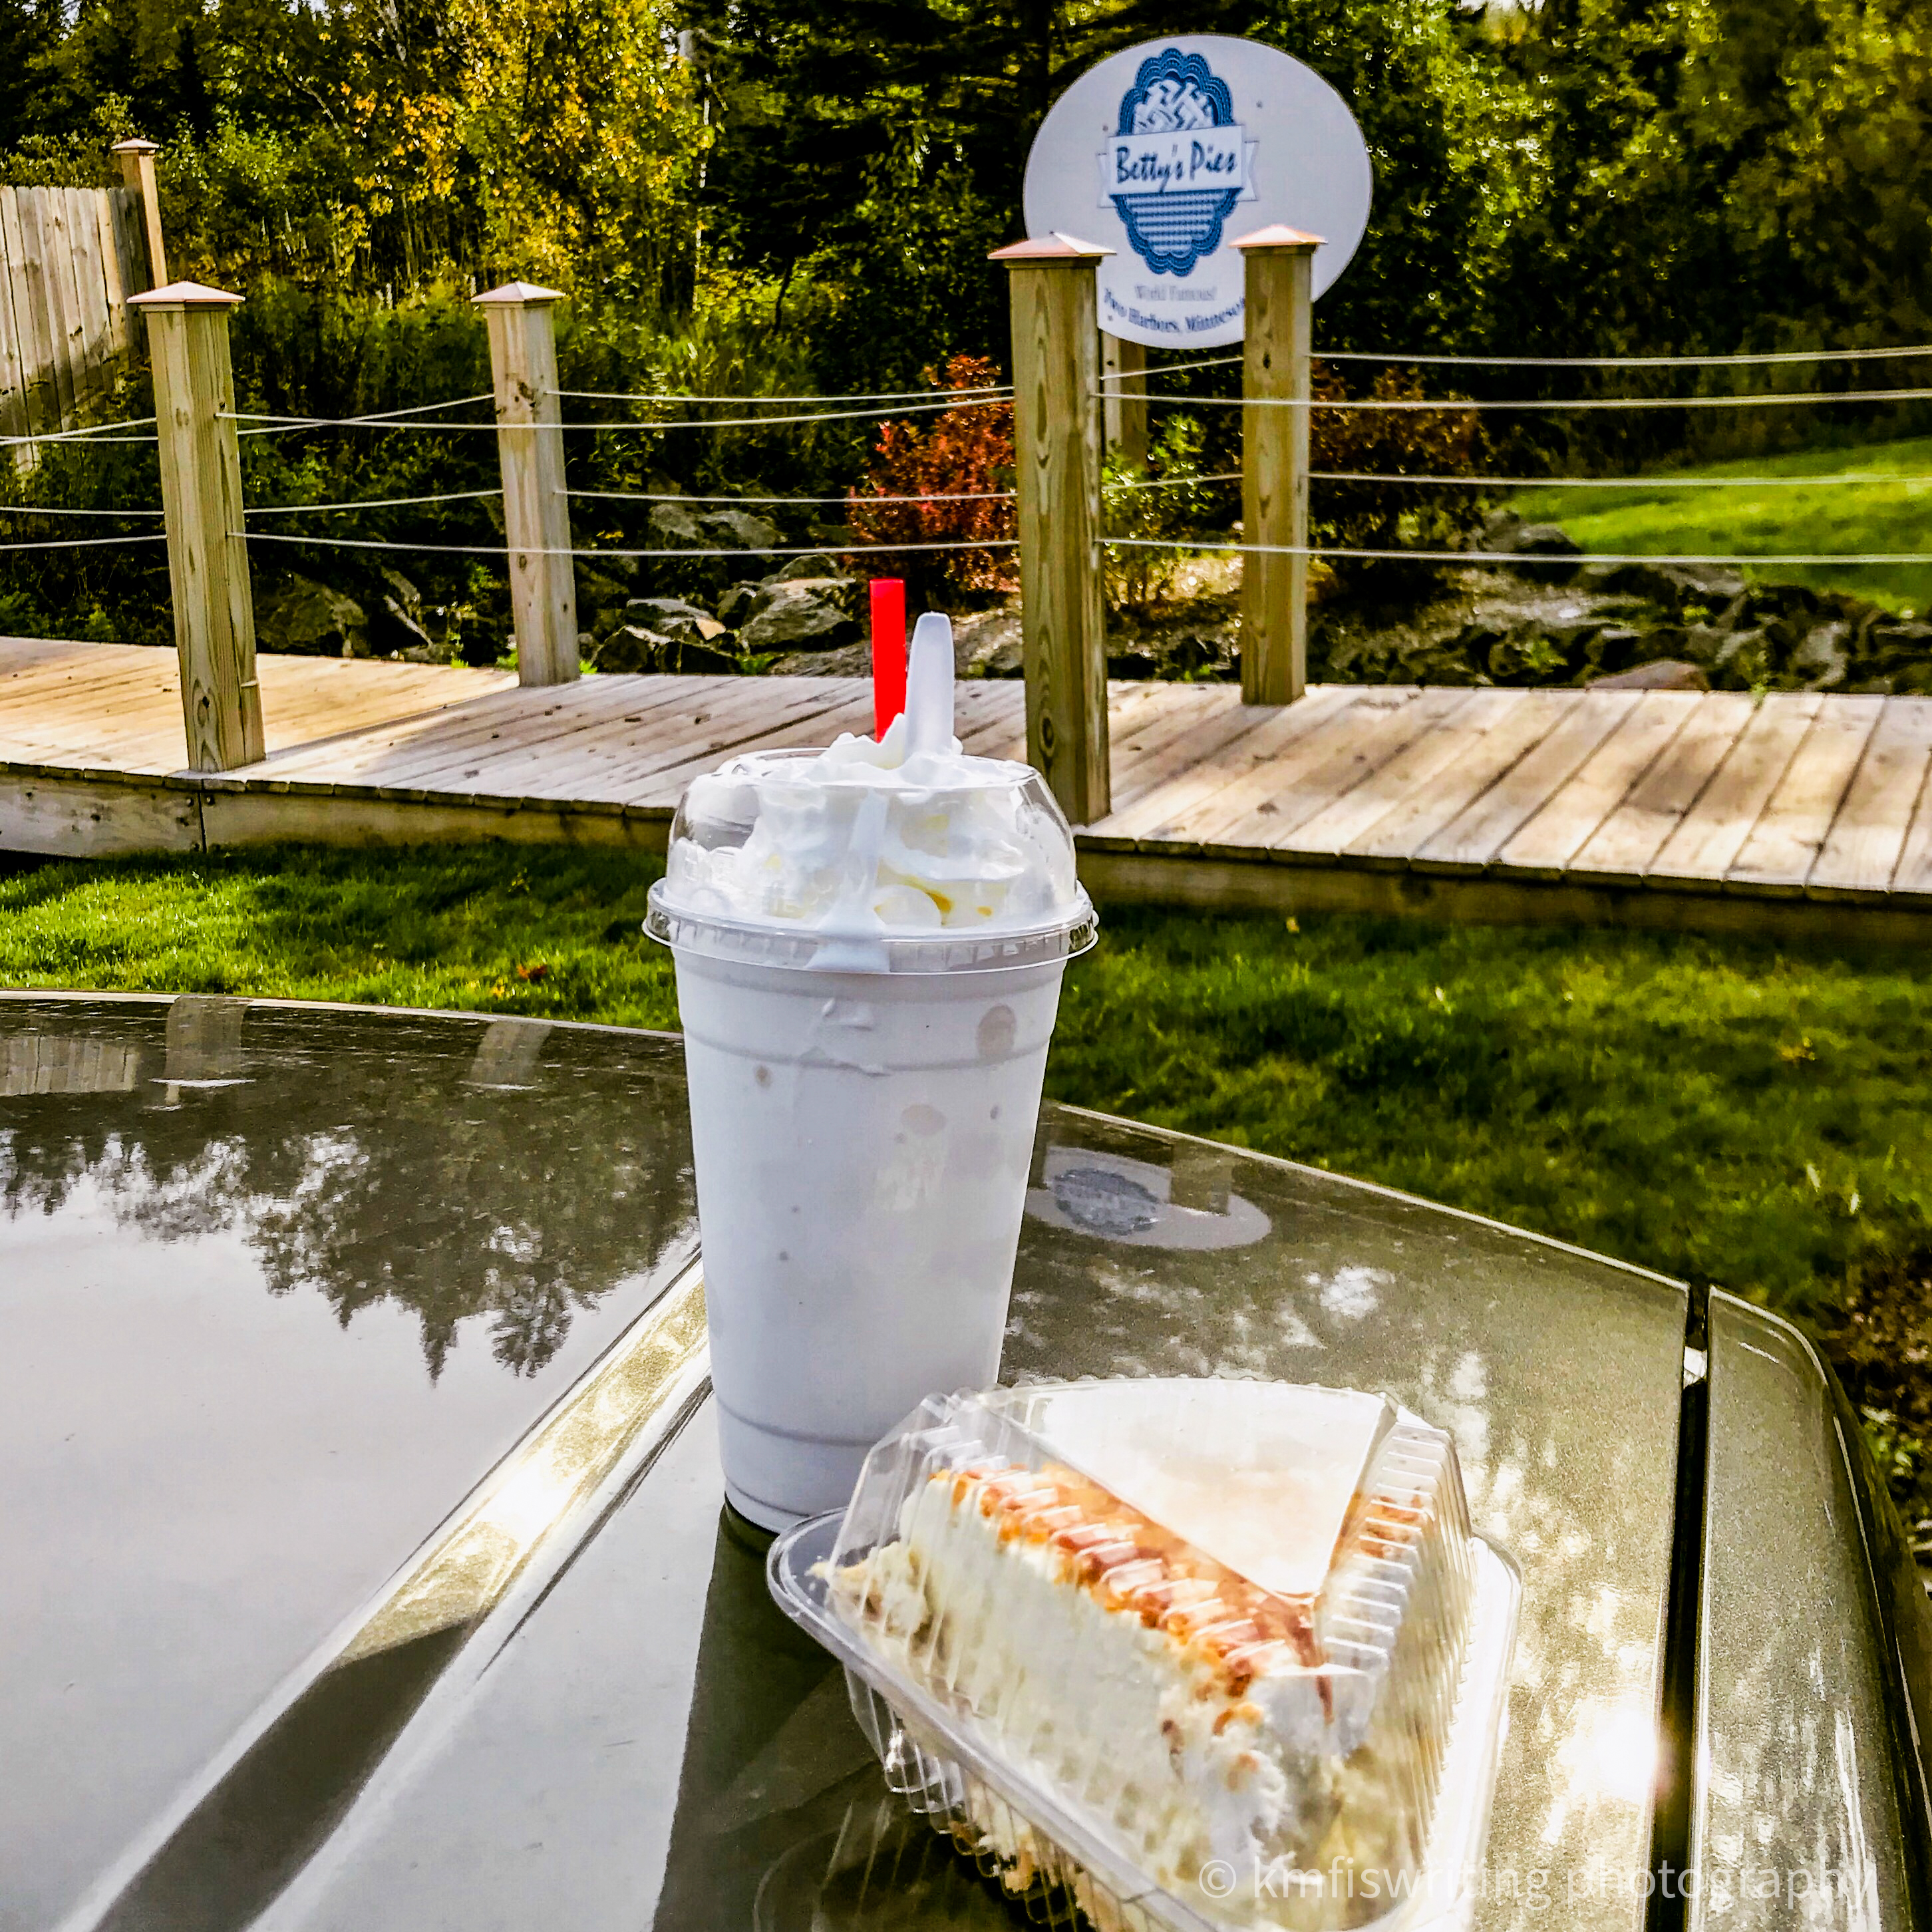 Milkshake and slice of pie sitting on car hood